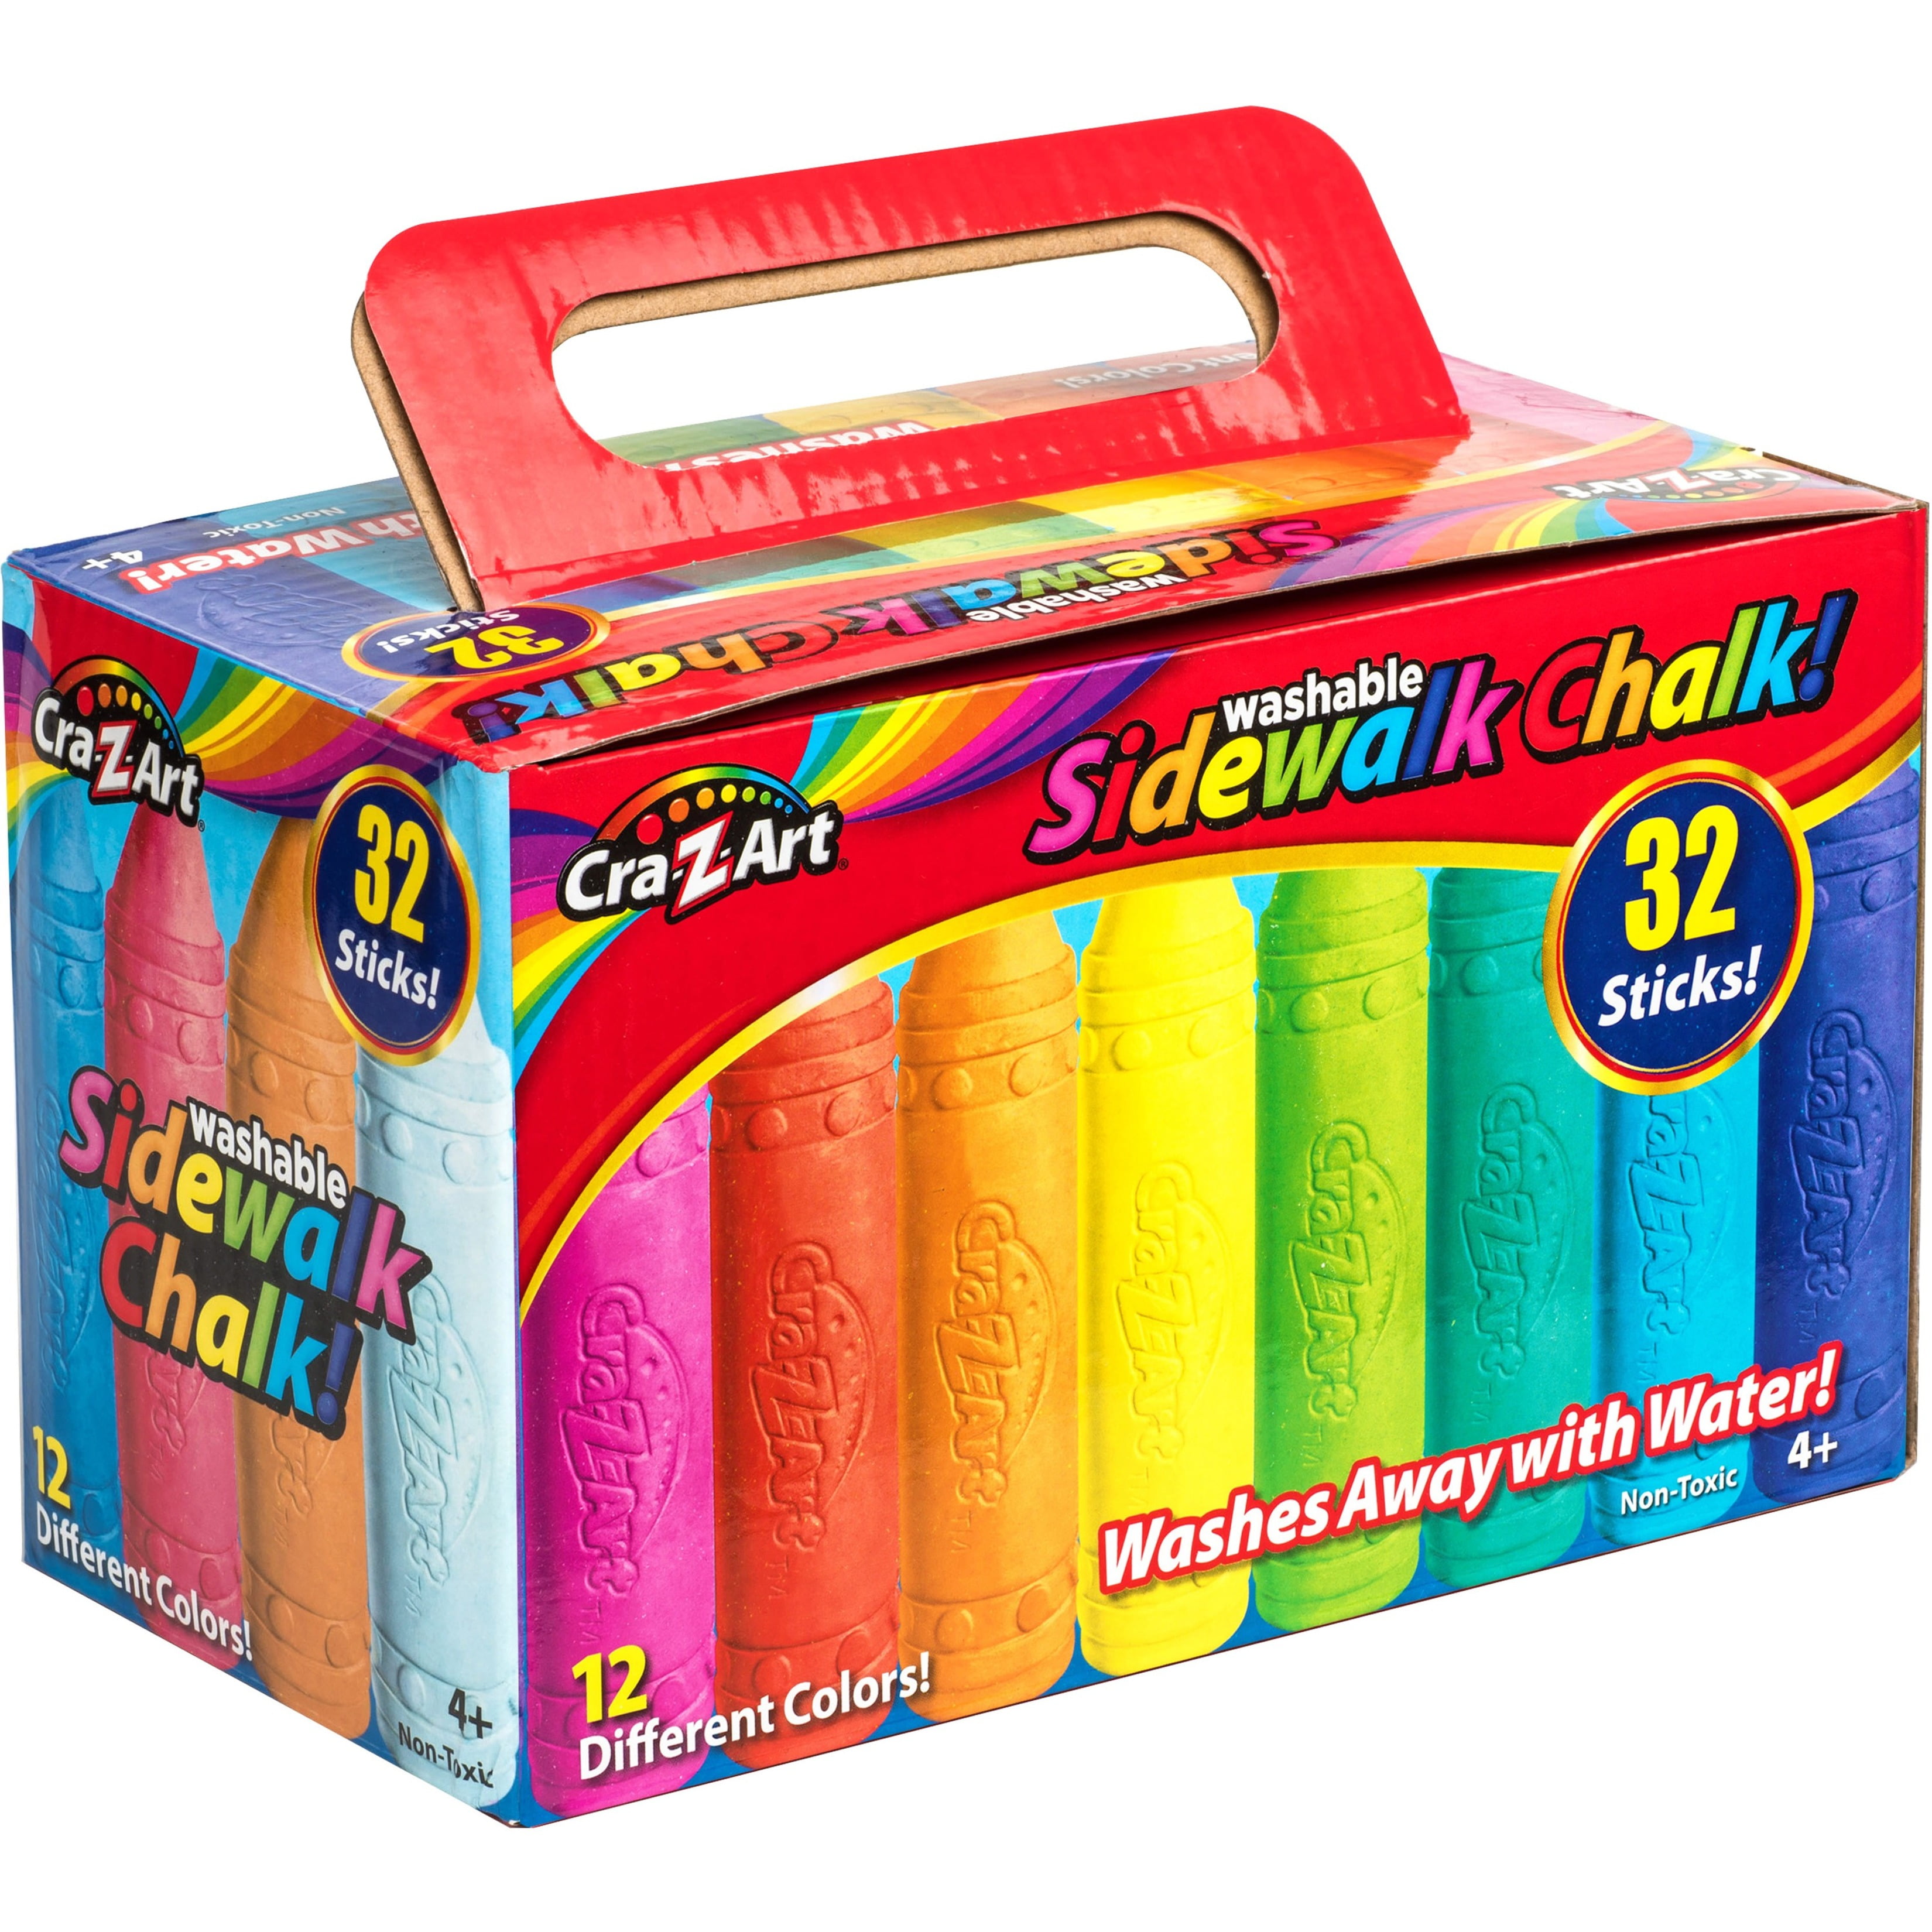 Cra Z Art Sidewalk Chalk, Washable - 32 sticks